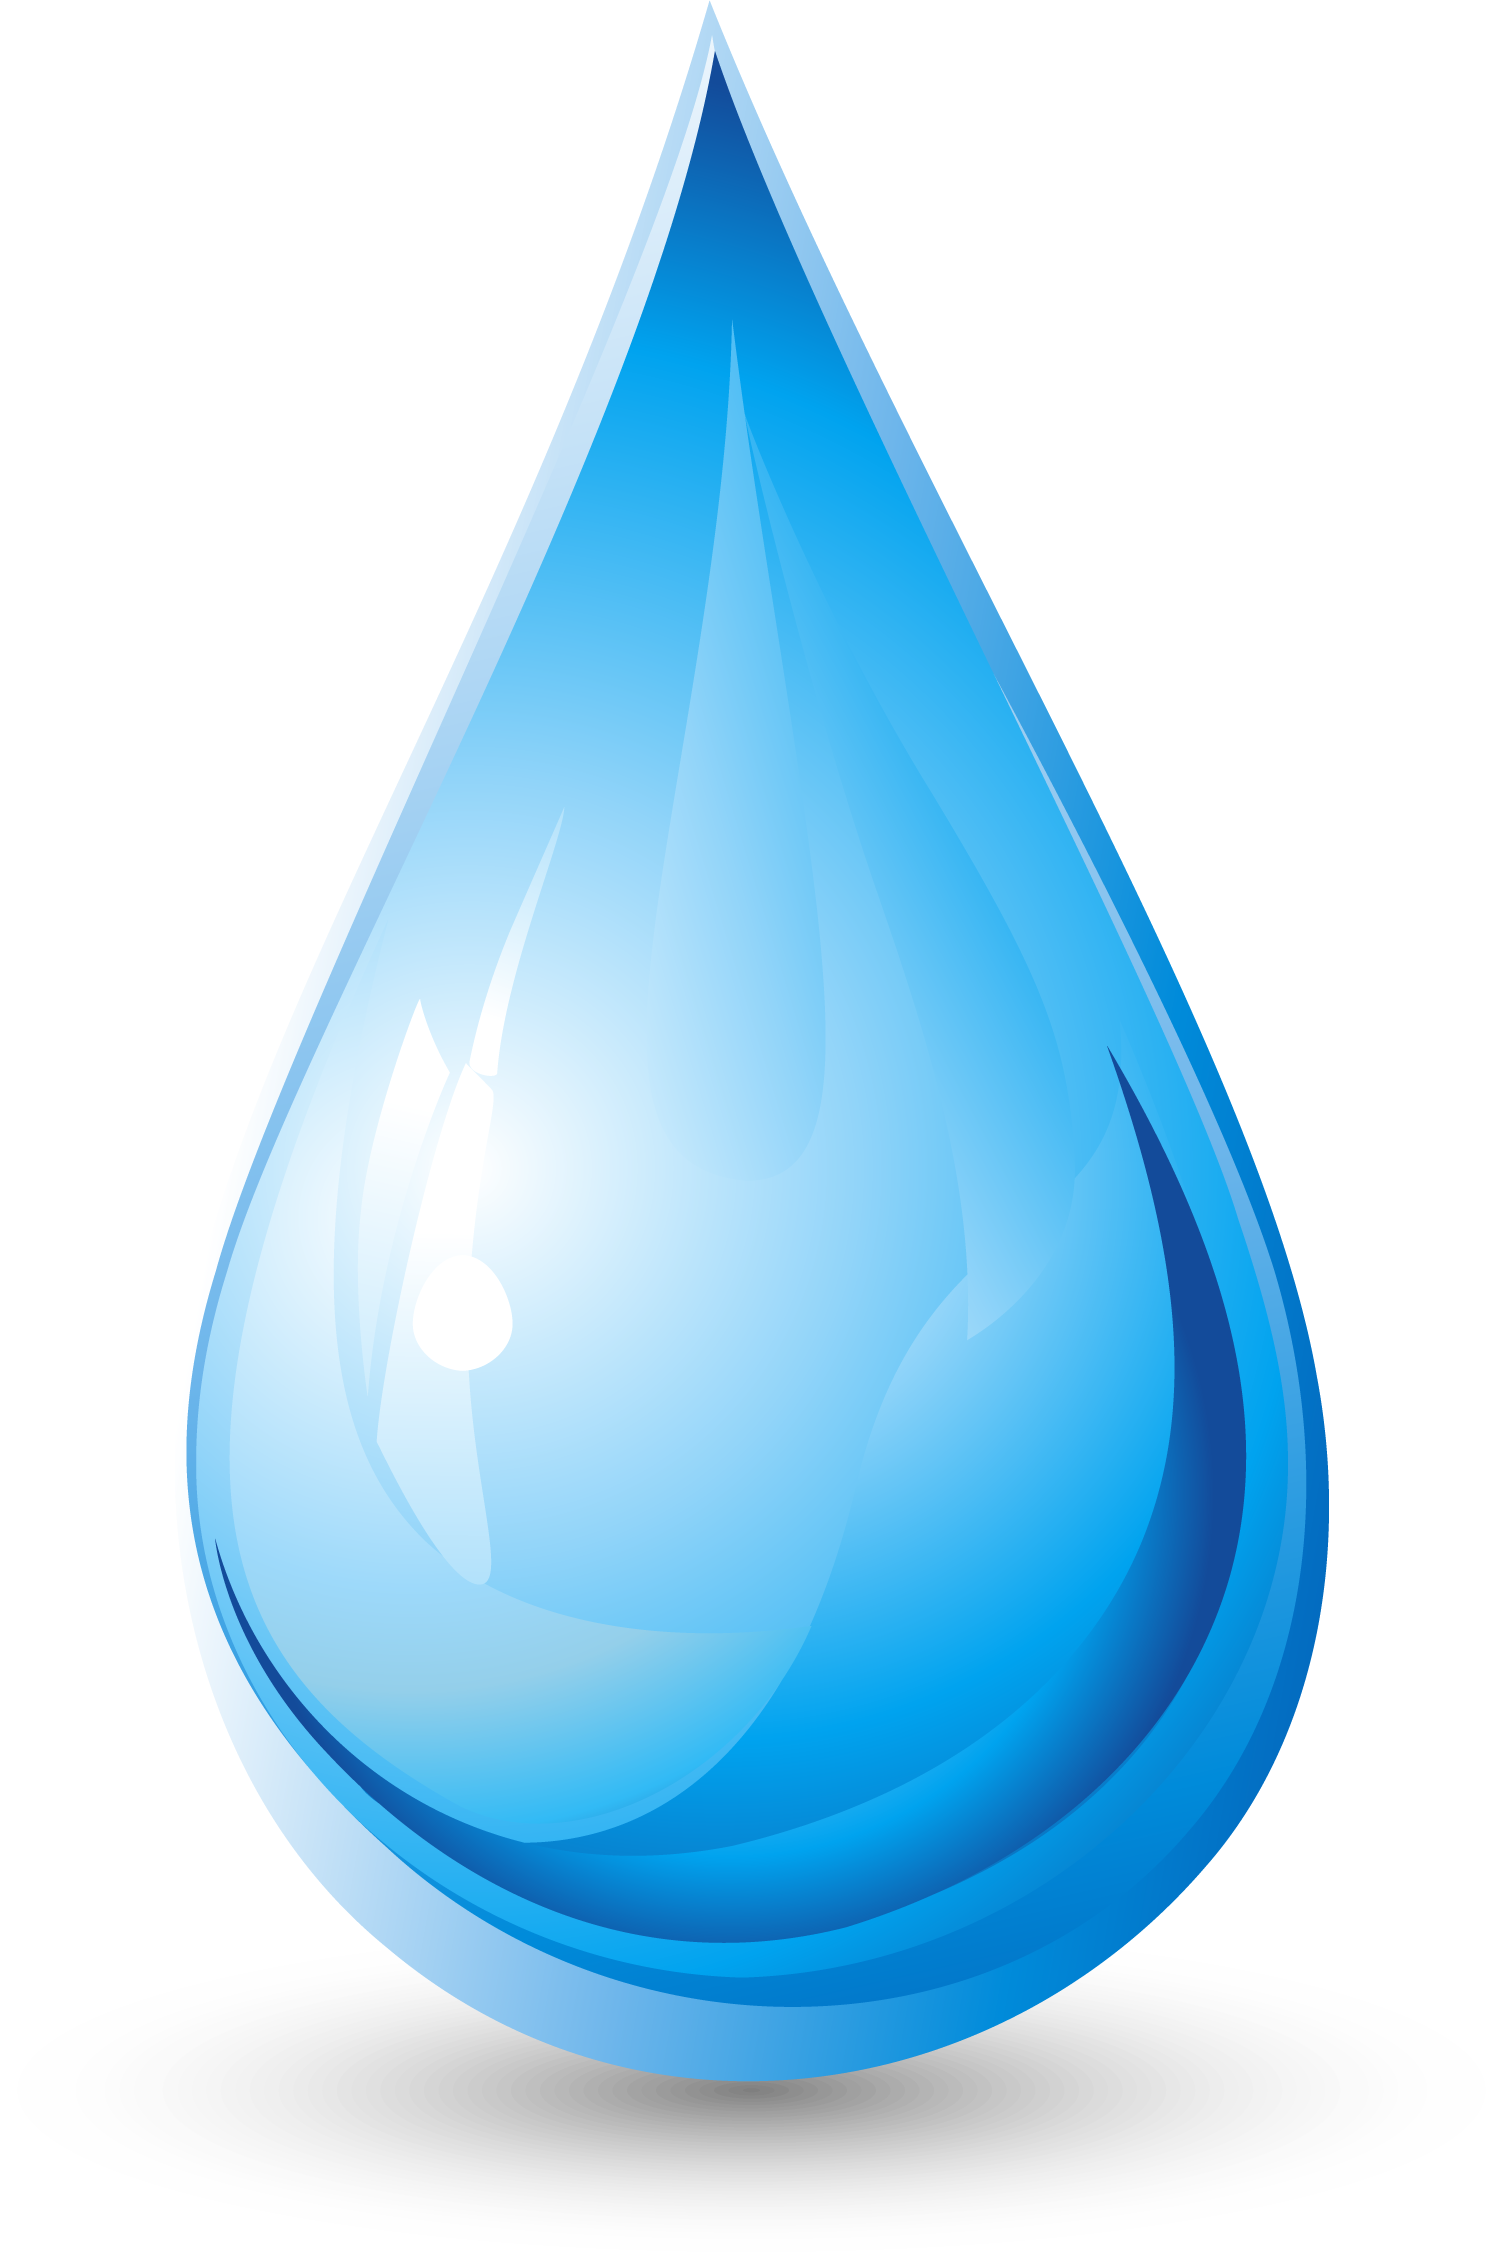 water drop illustrator vector free download